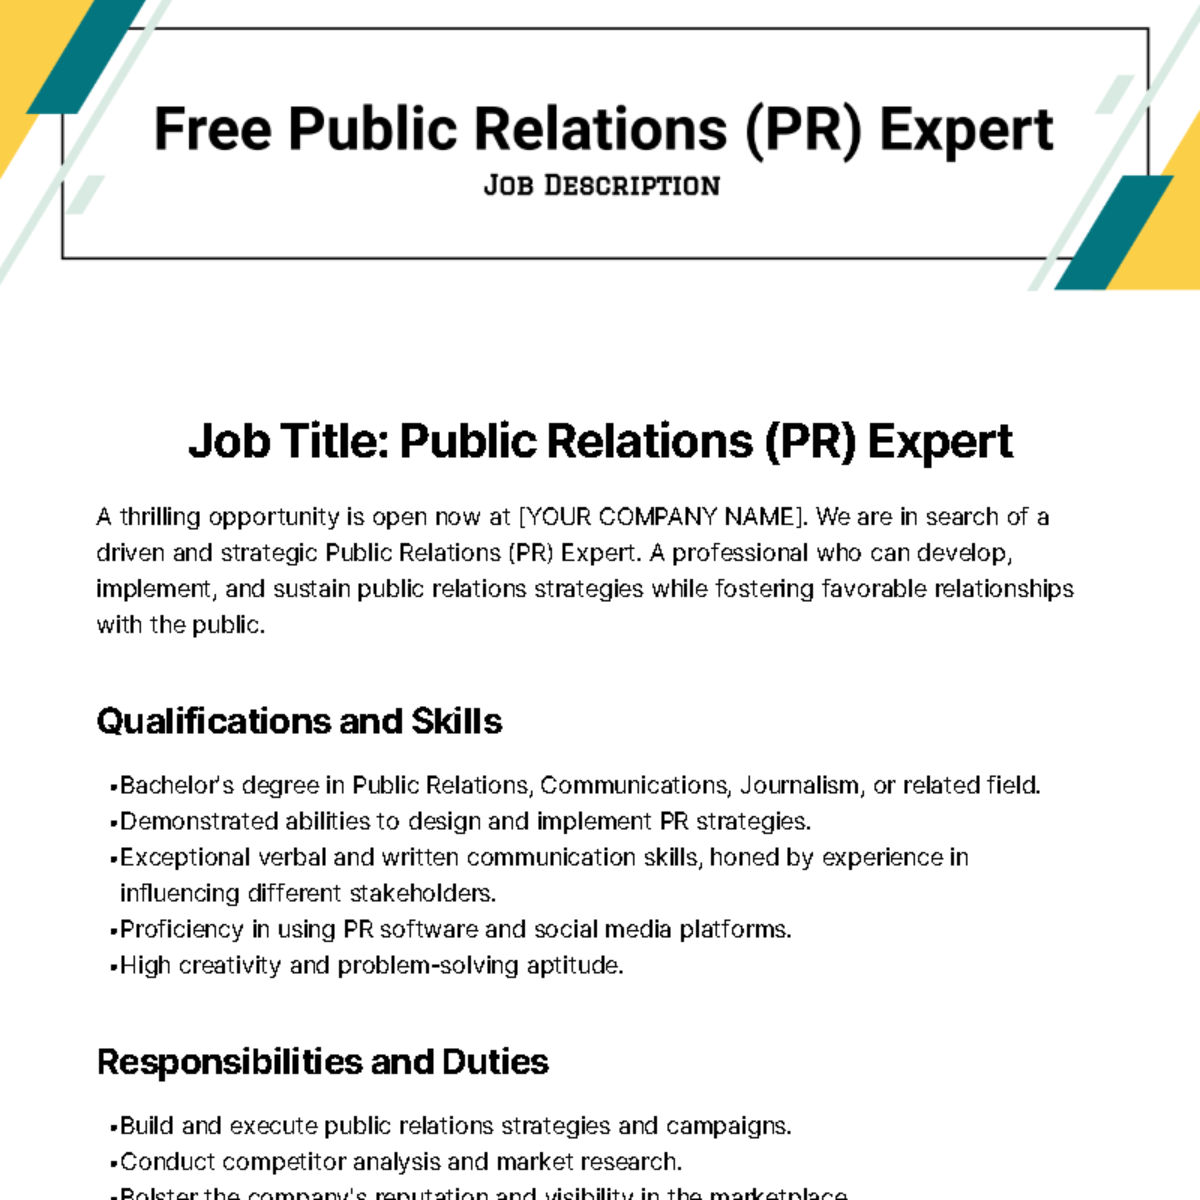 Public Relations (PR) Expert Job Description Template